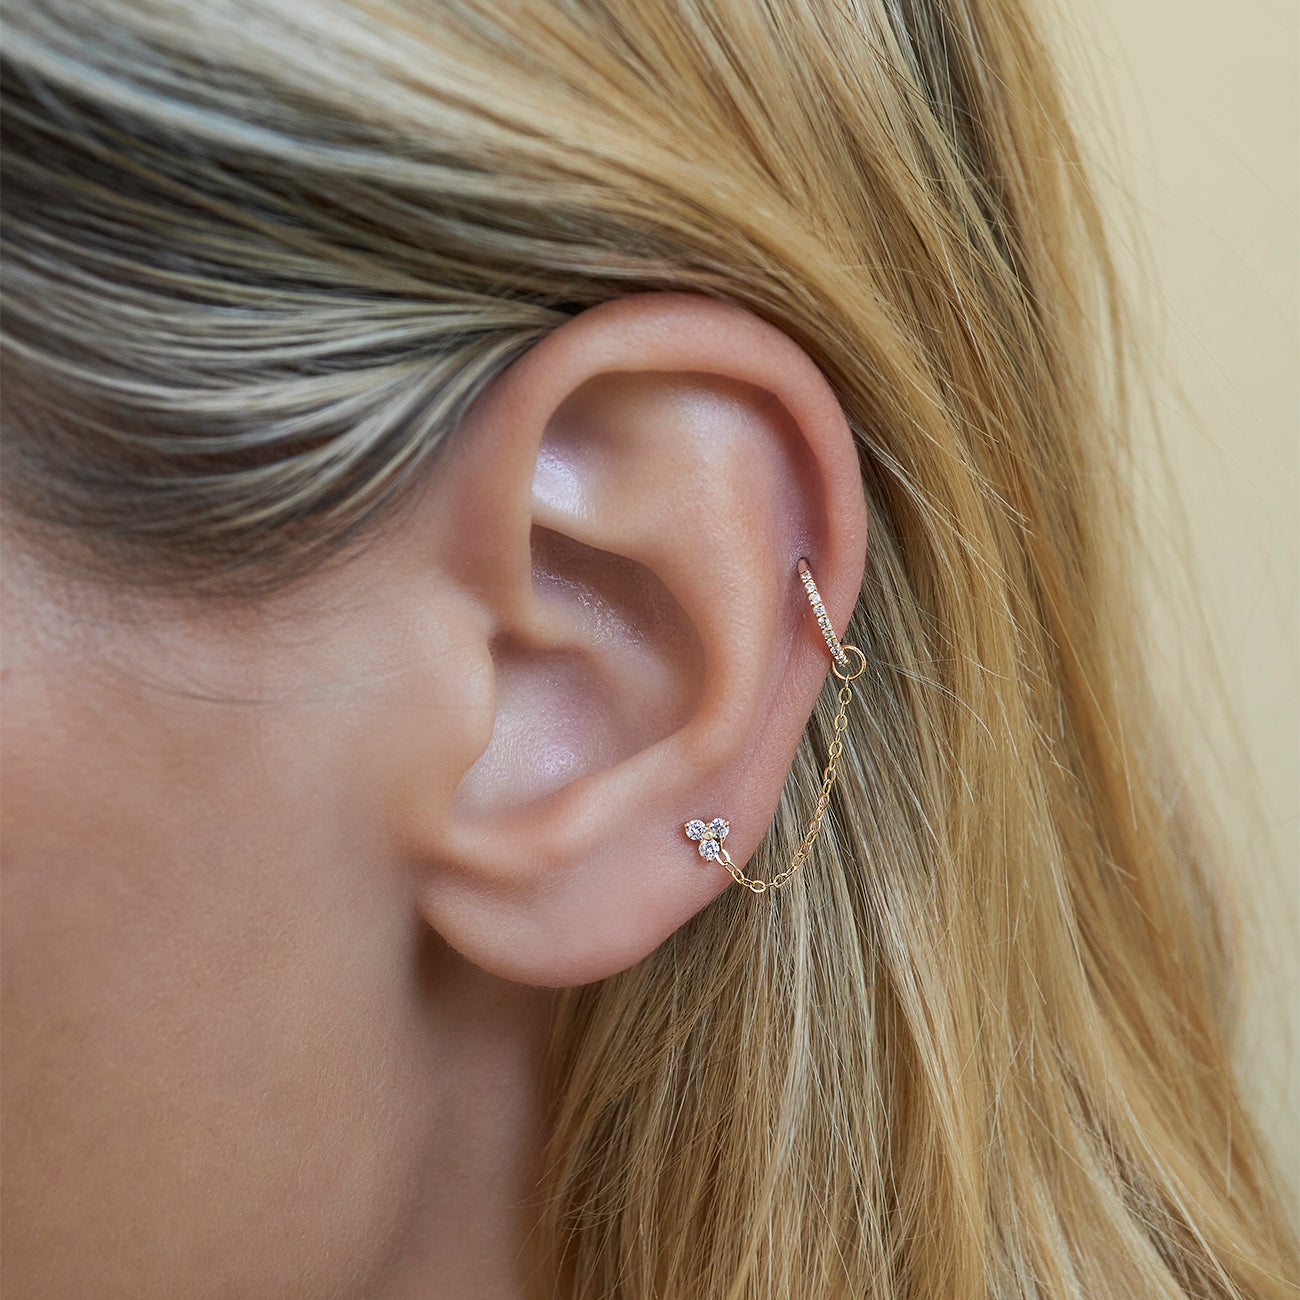 Details 259+ small earrings for upper ear best